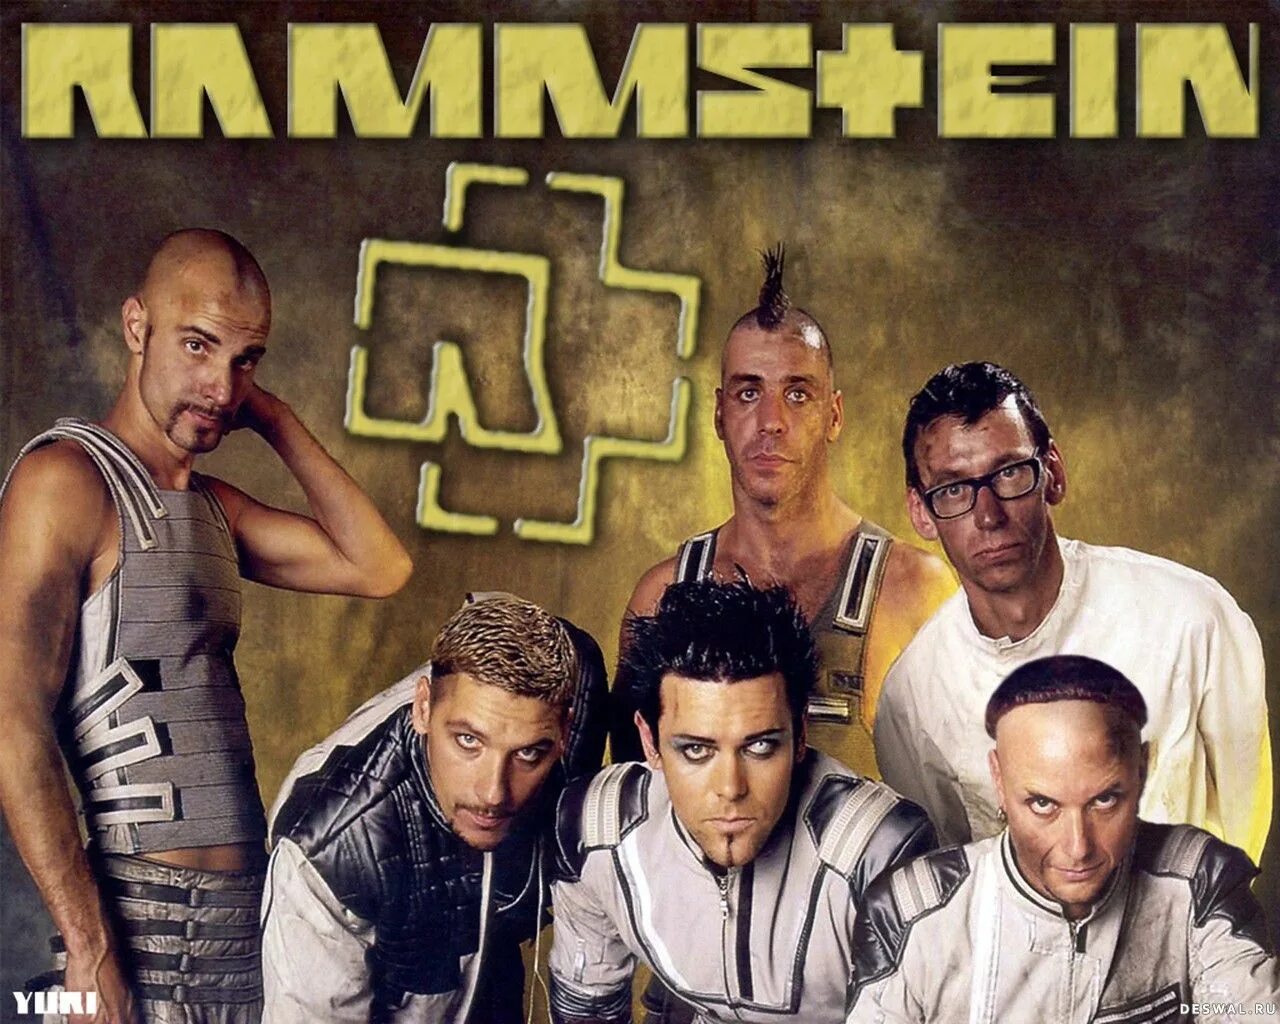 Группа 320 кбит. Постер группы рамштайн. Плакаты группы рамштайн. Группа Rammstein постеры. Плакаты группы Rammstein.